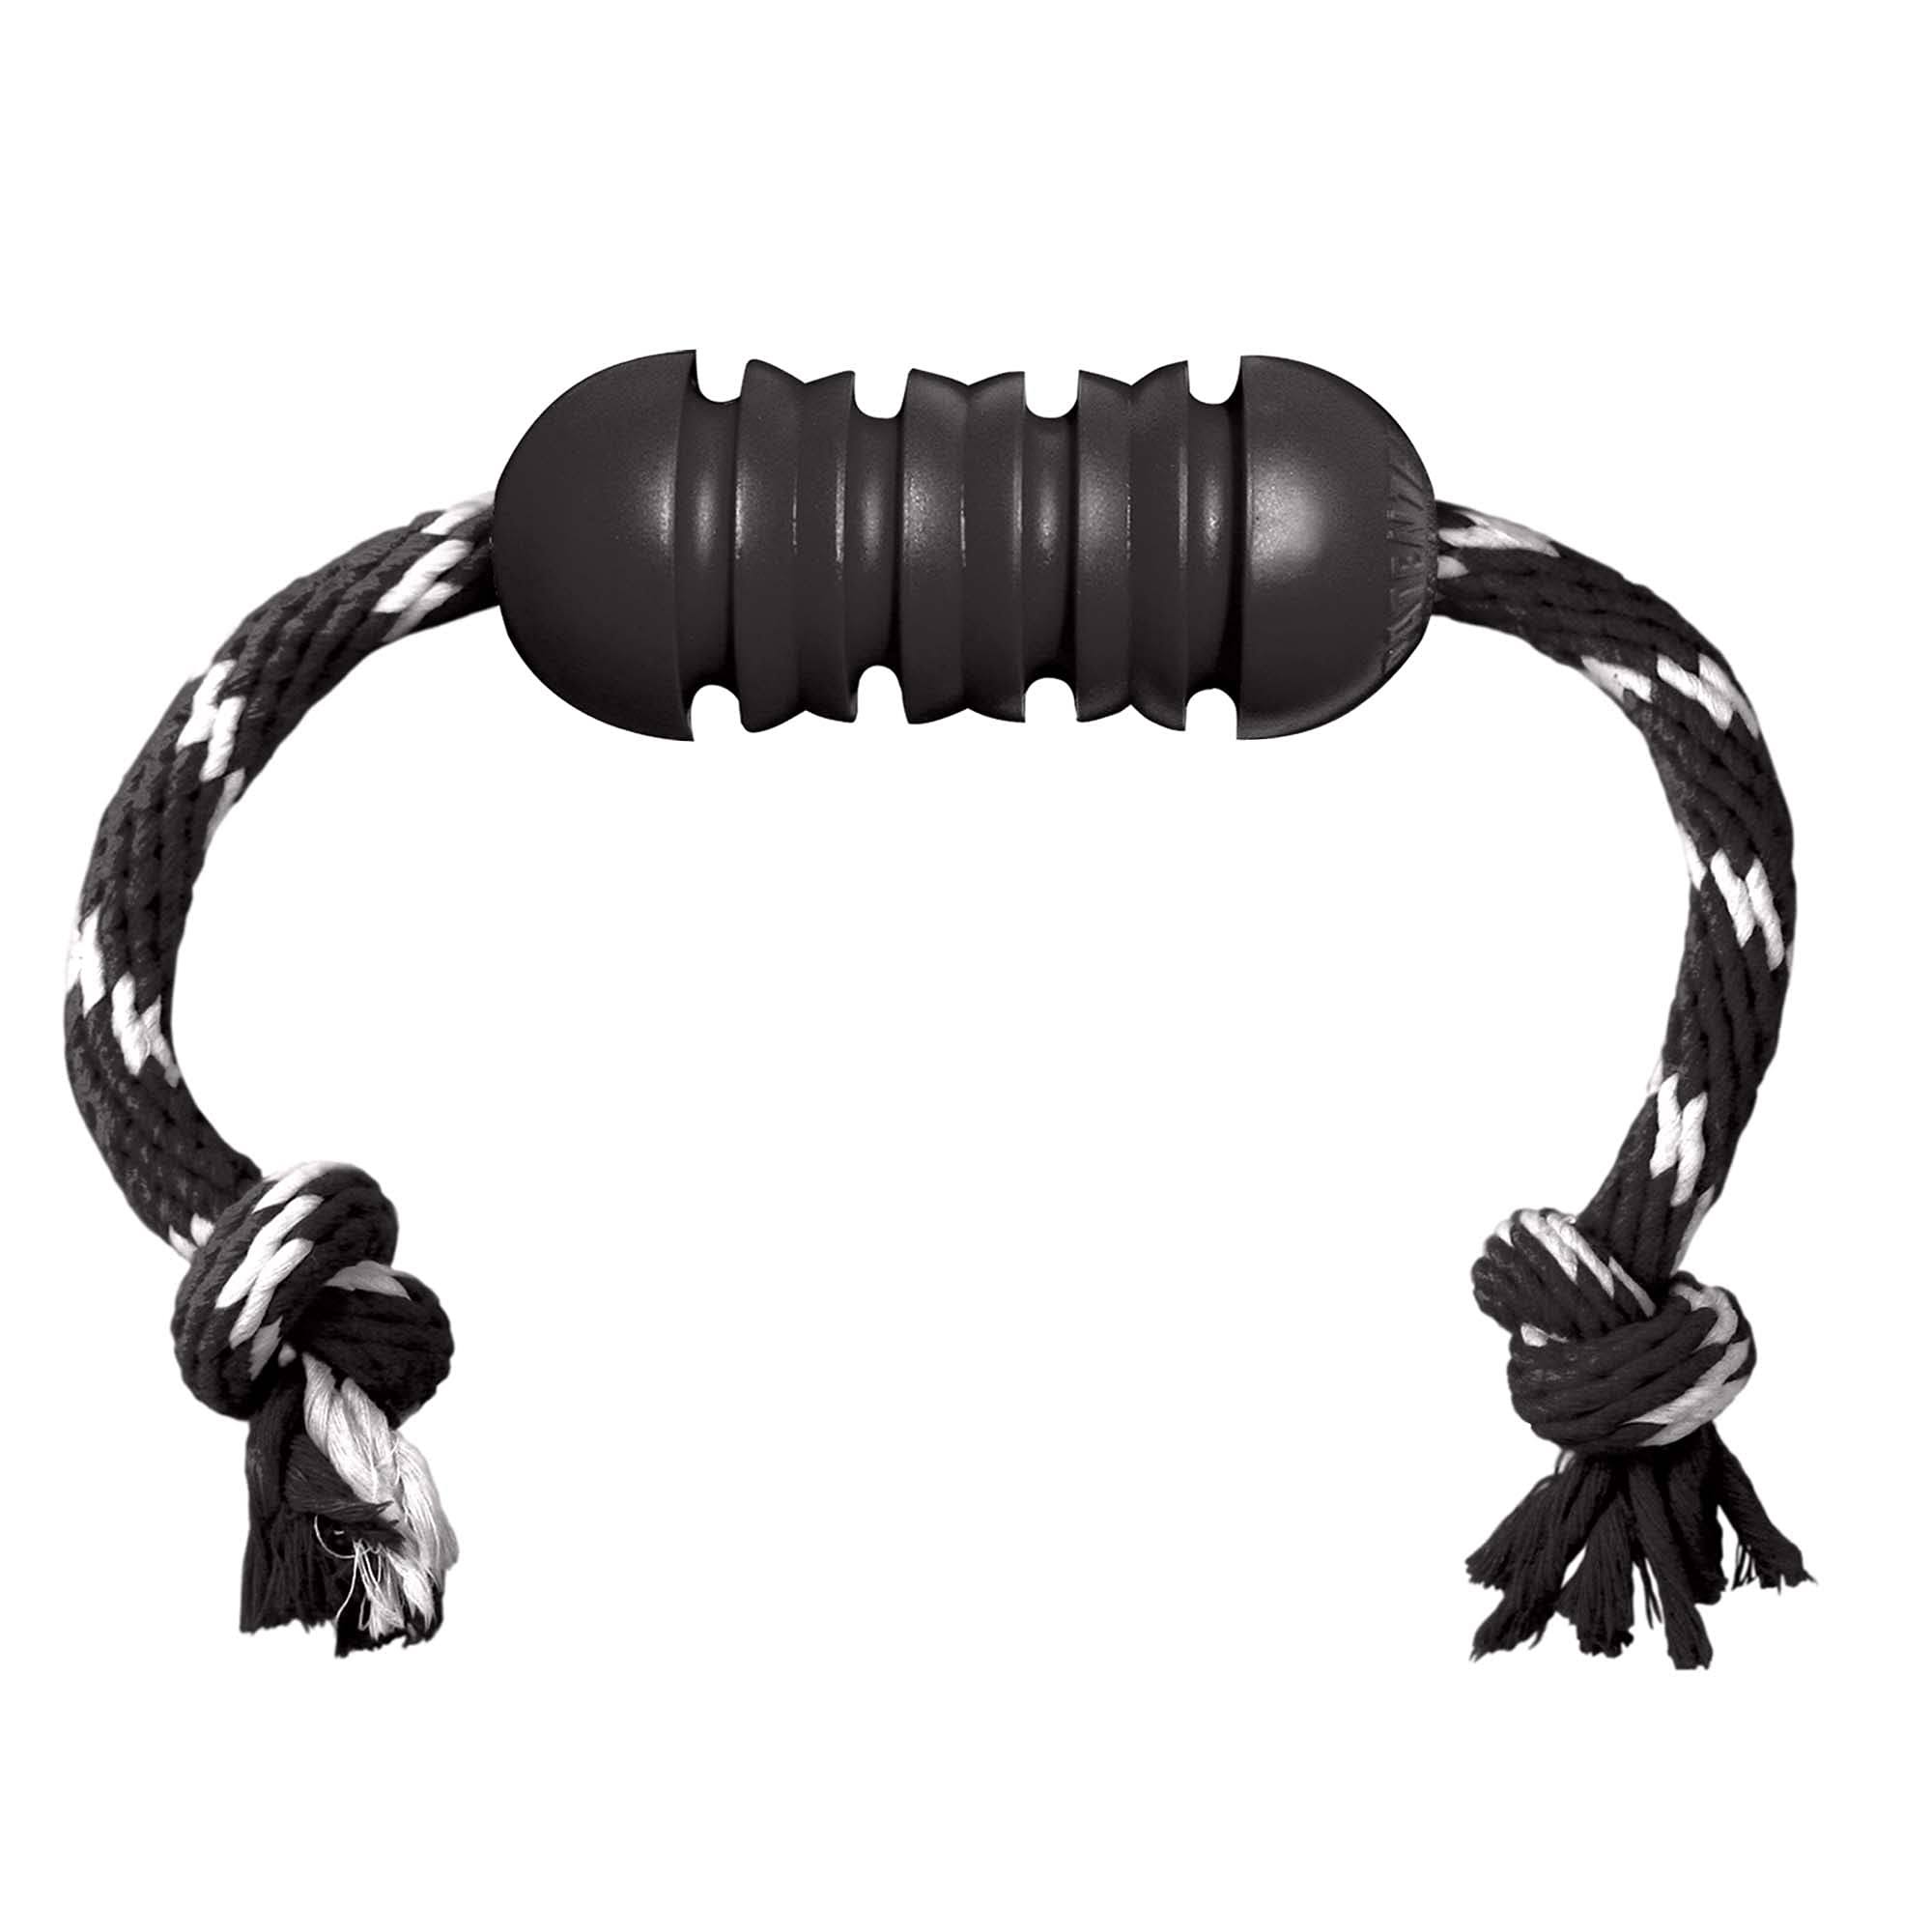 Kong Extreme Dental Dog Toy with Rope - Medium